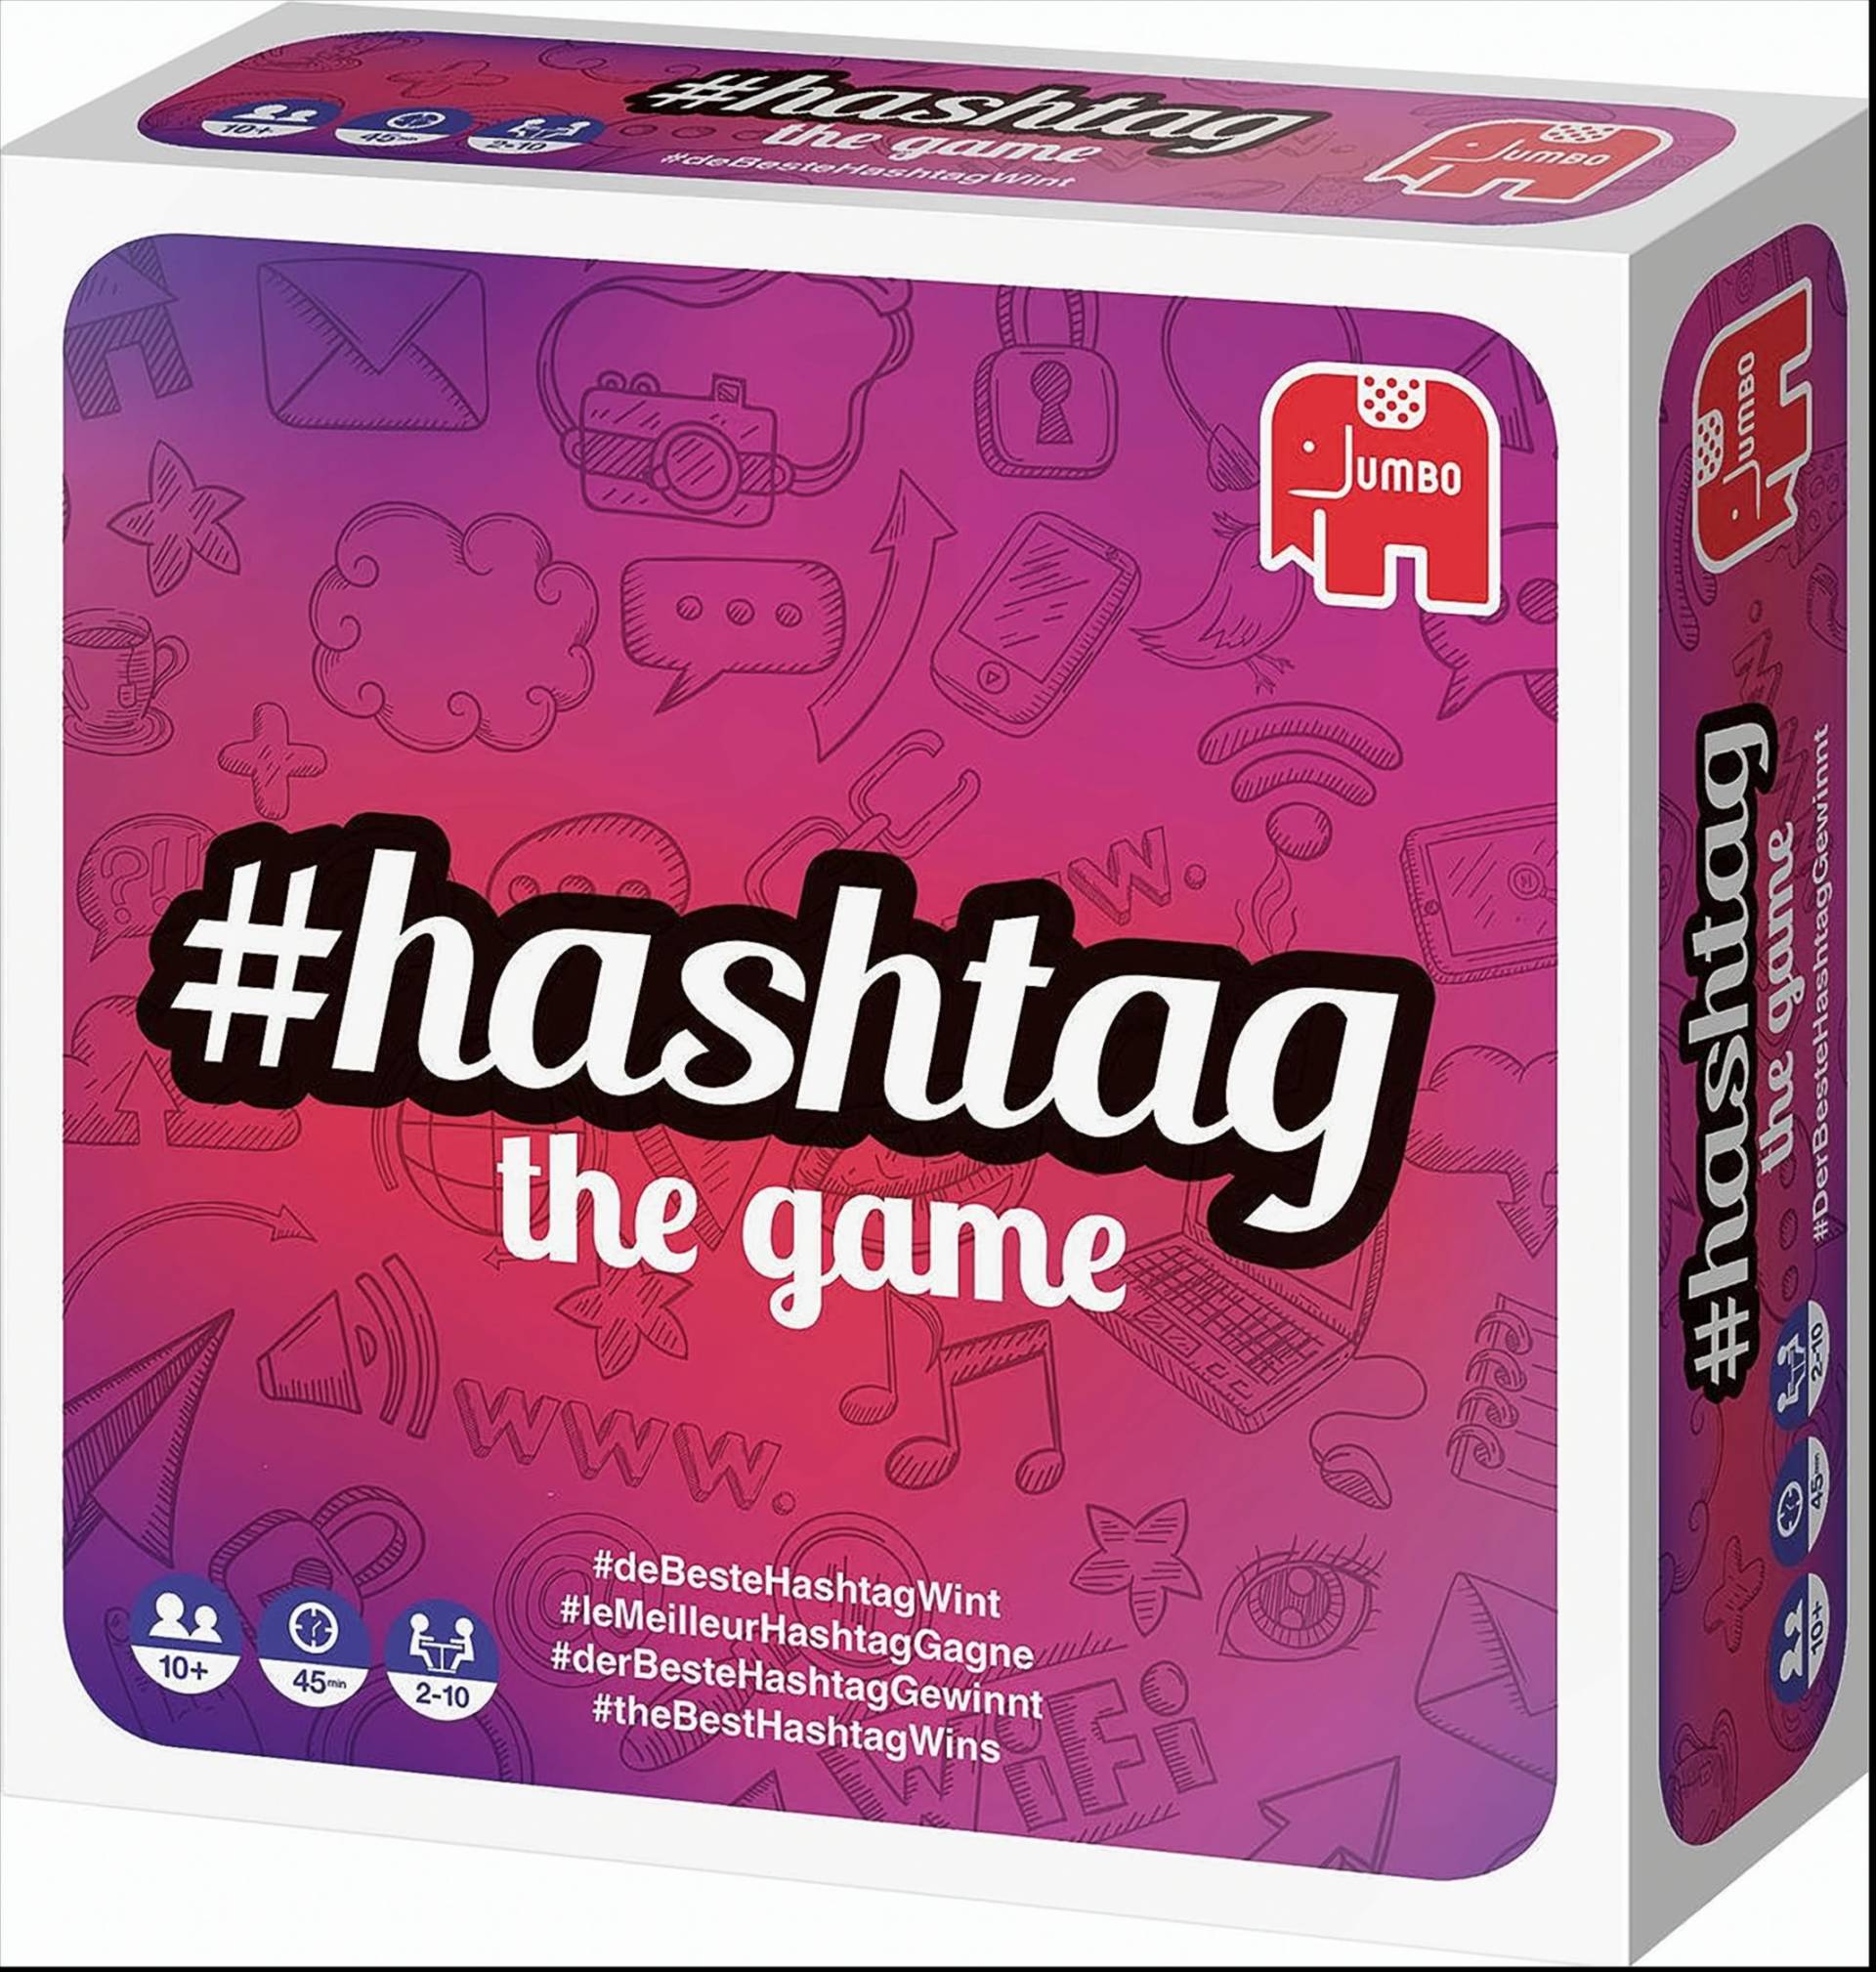 Hashtag the game von Jumbo